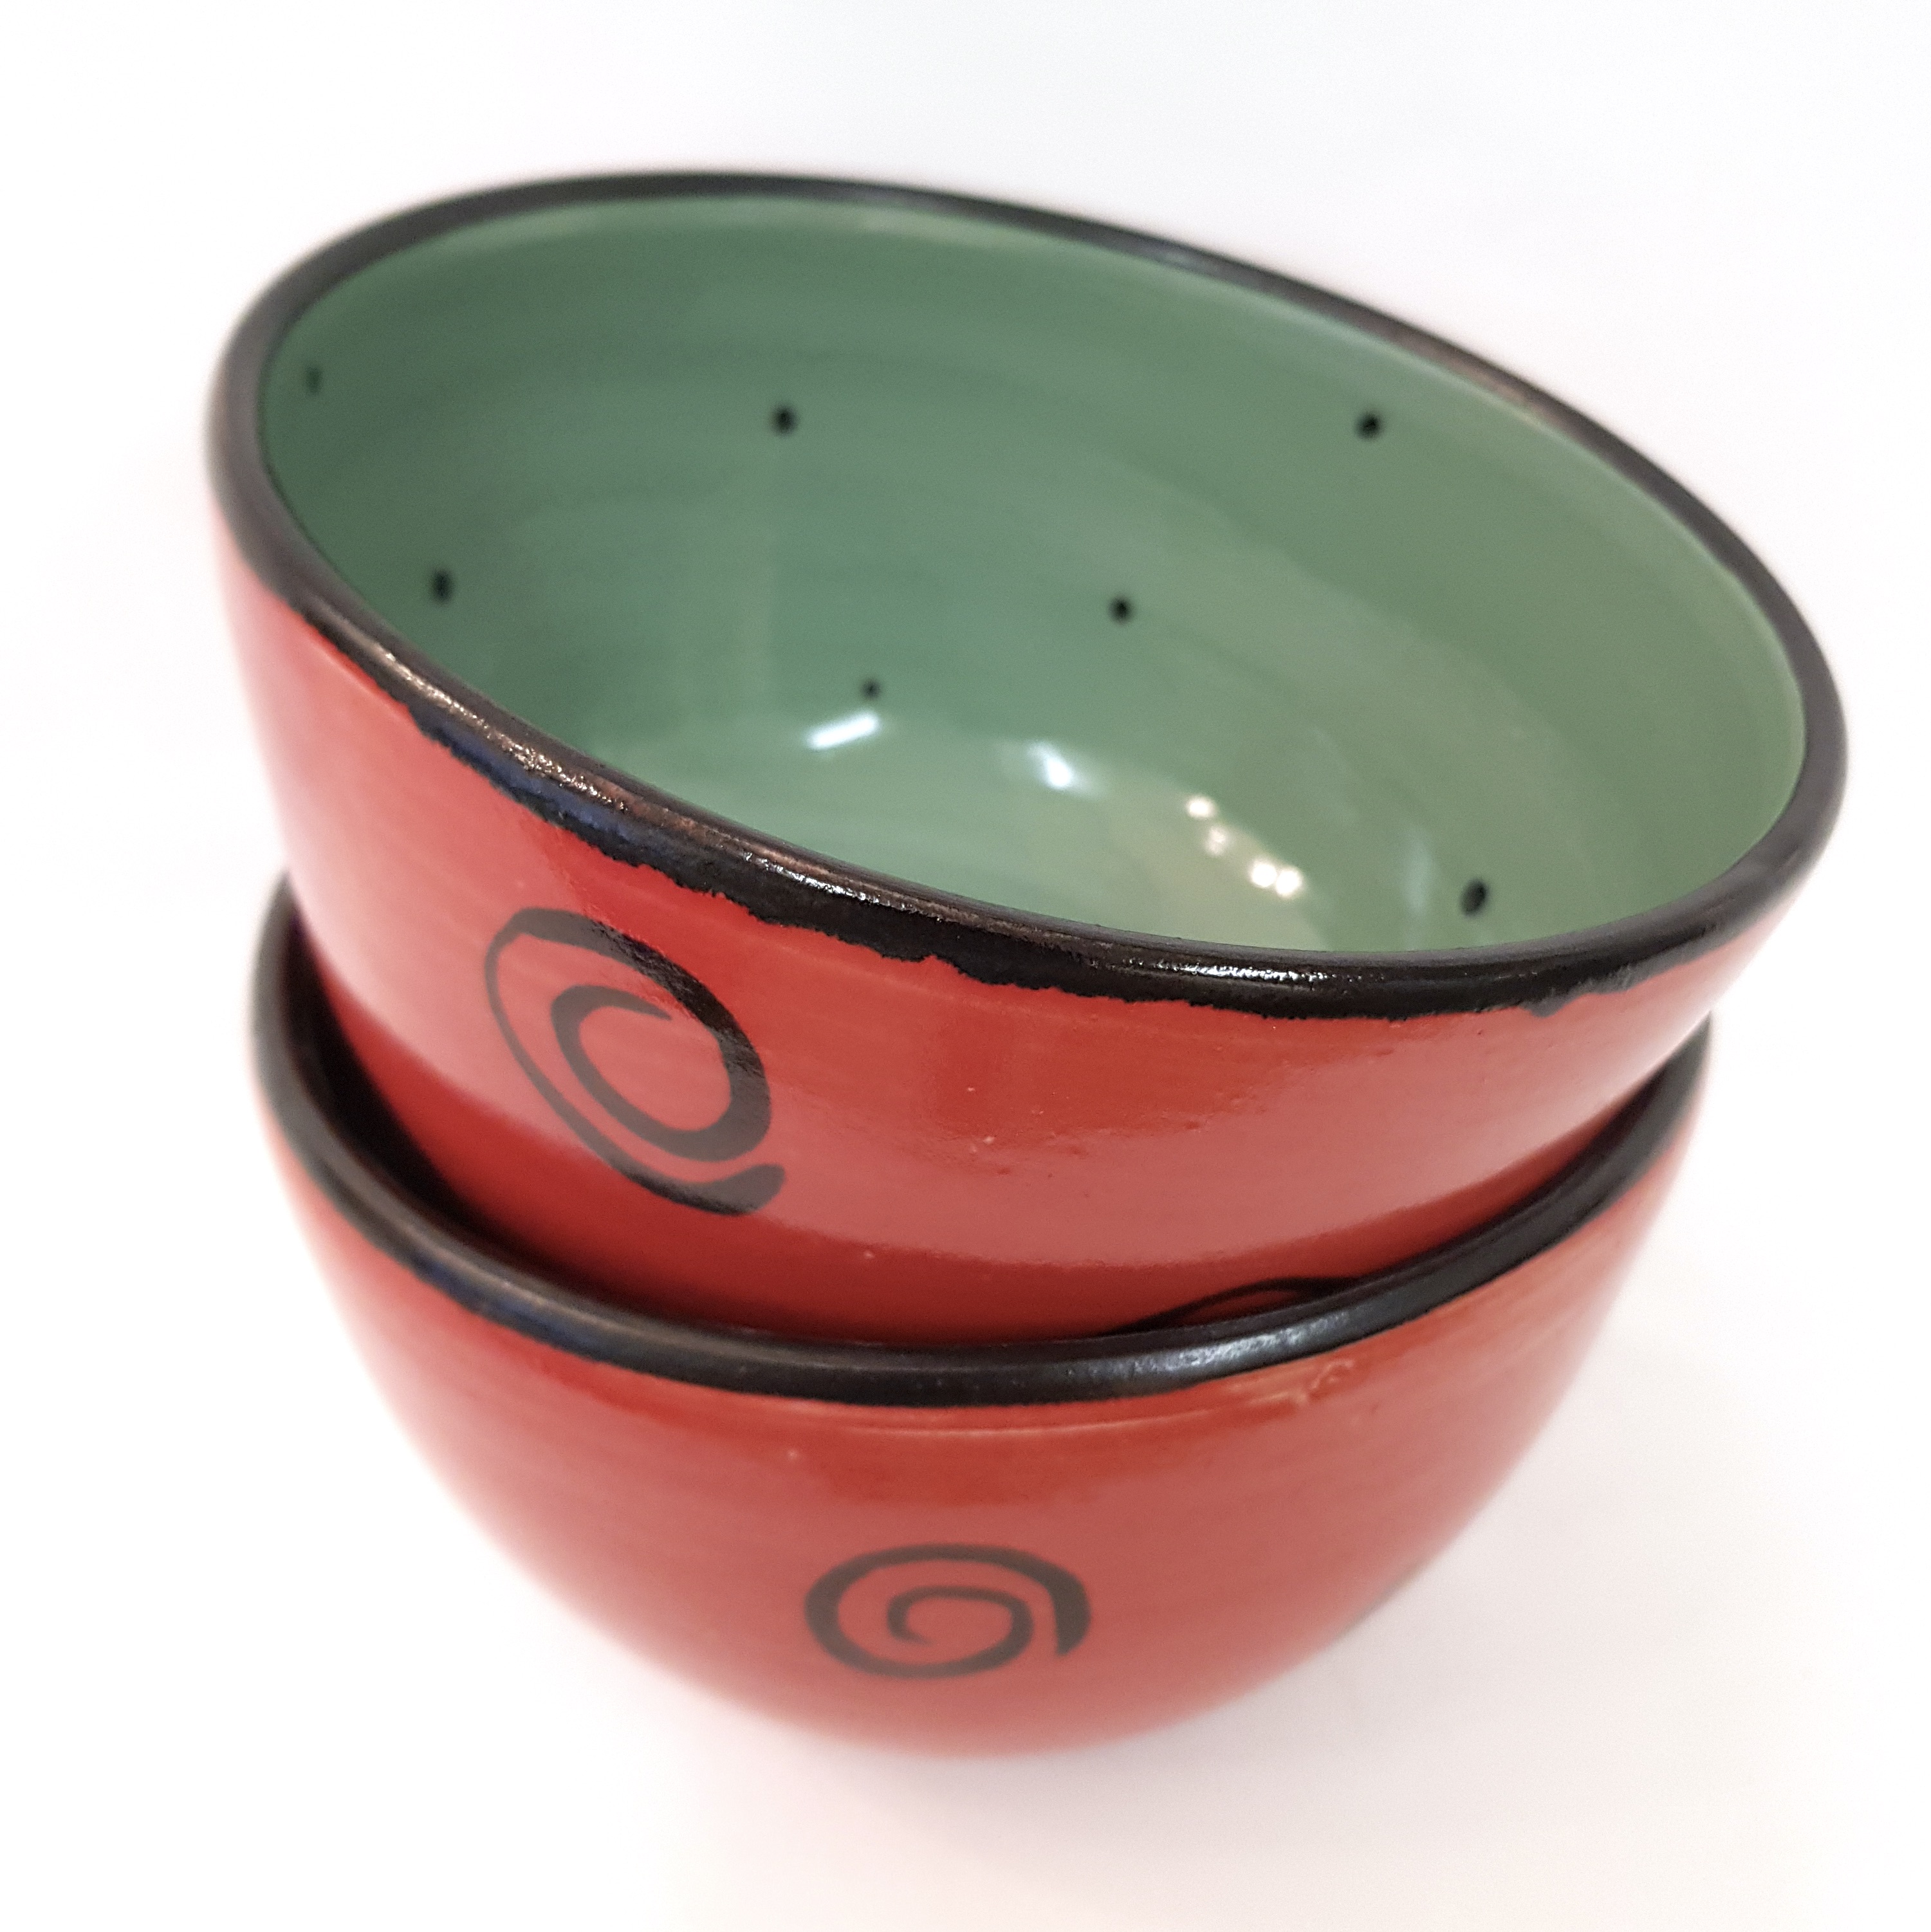 Keramik-Bowl, Unikat, Töpferei la ceramica Basel, Töpferkurse, Shop, Keramik, Teamevents